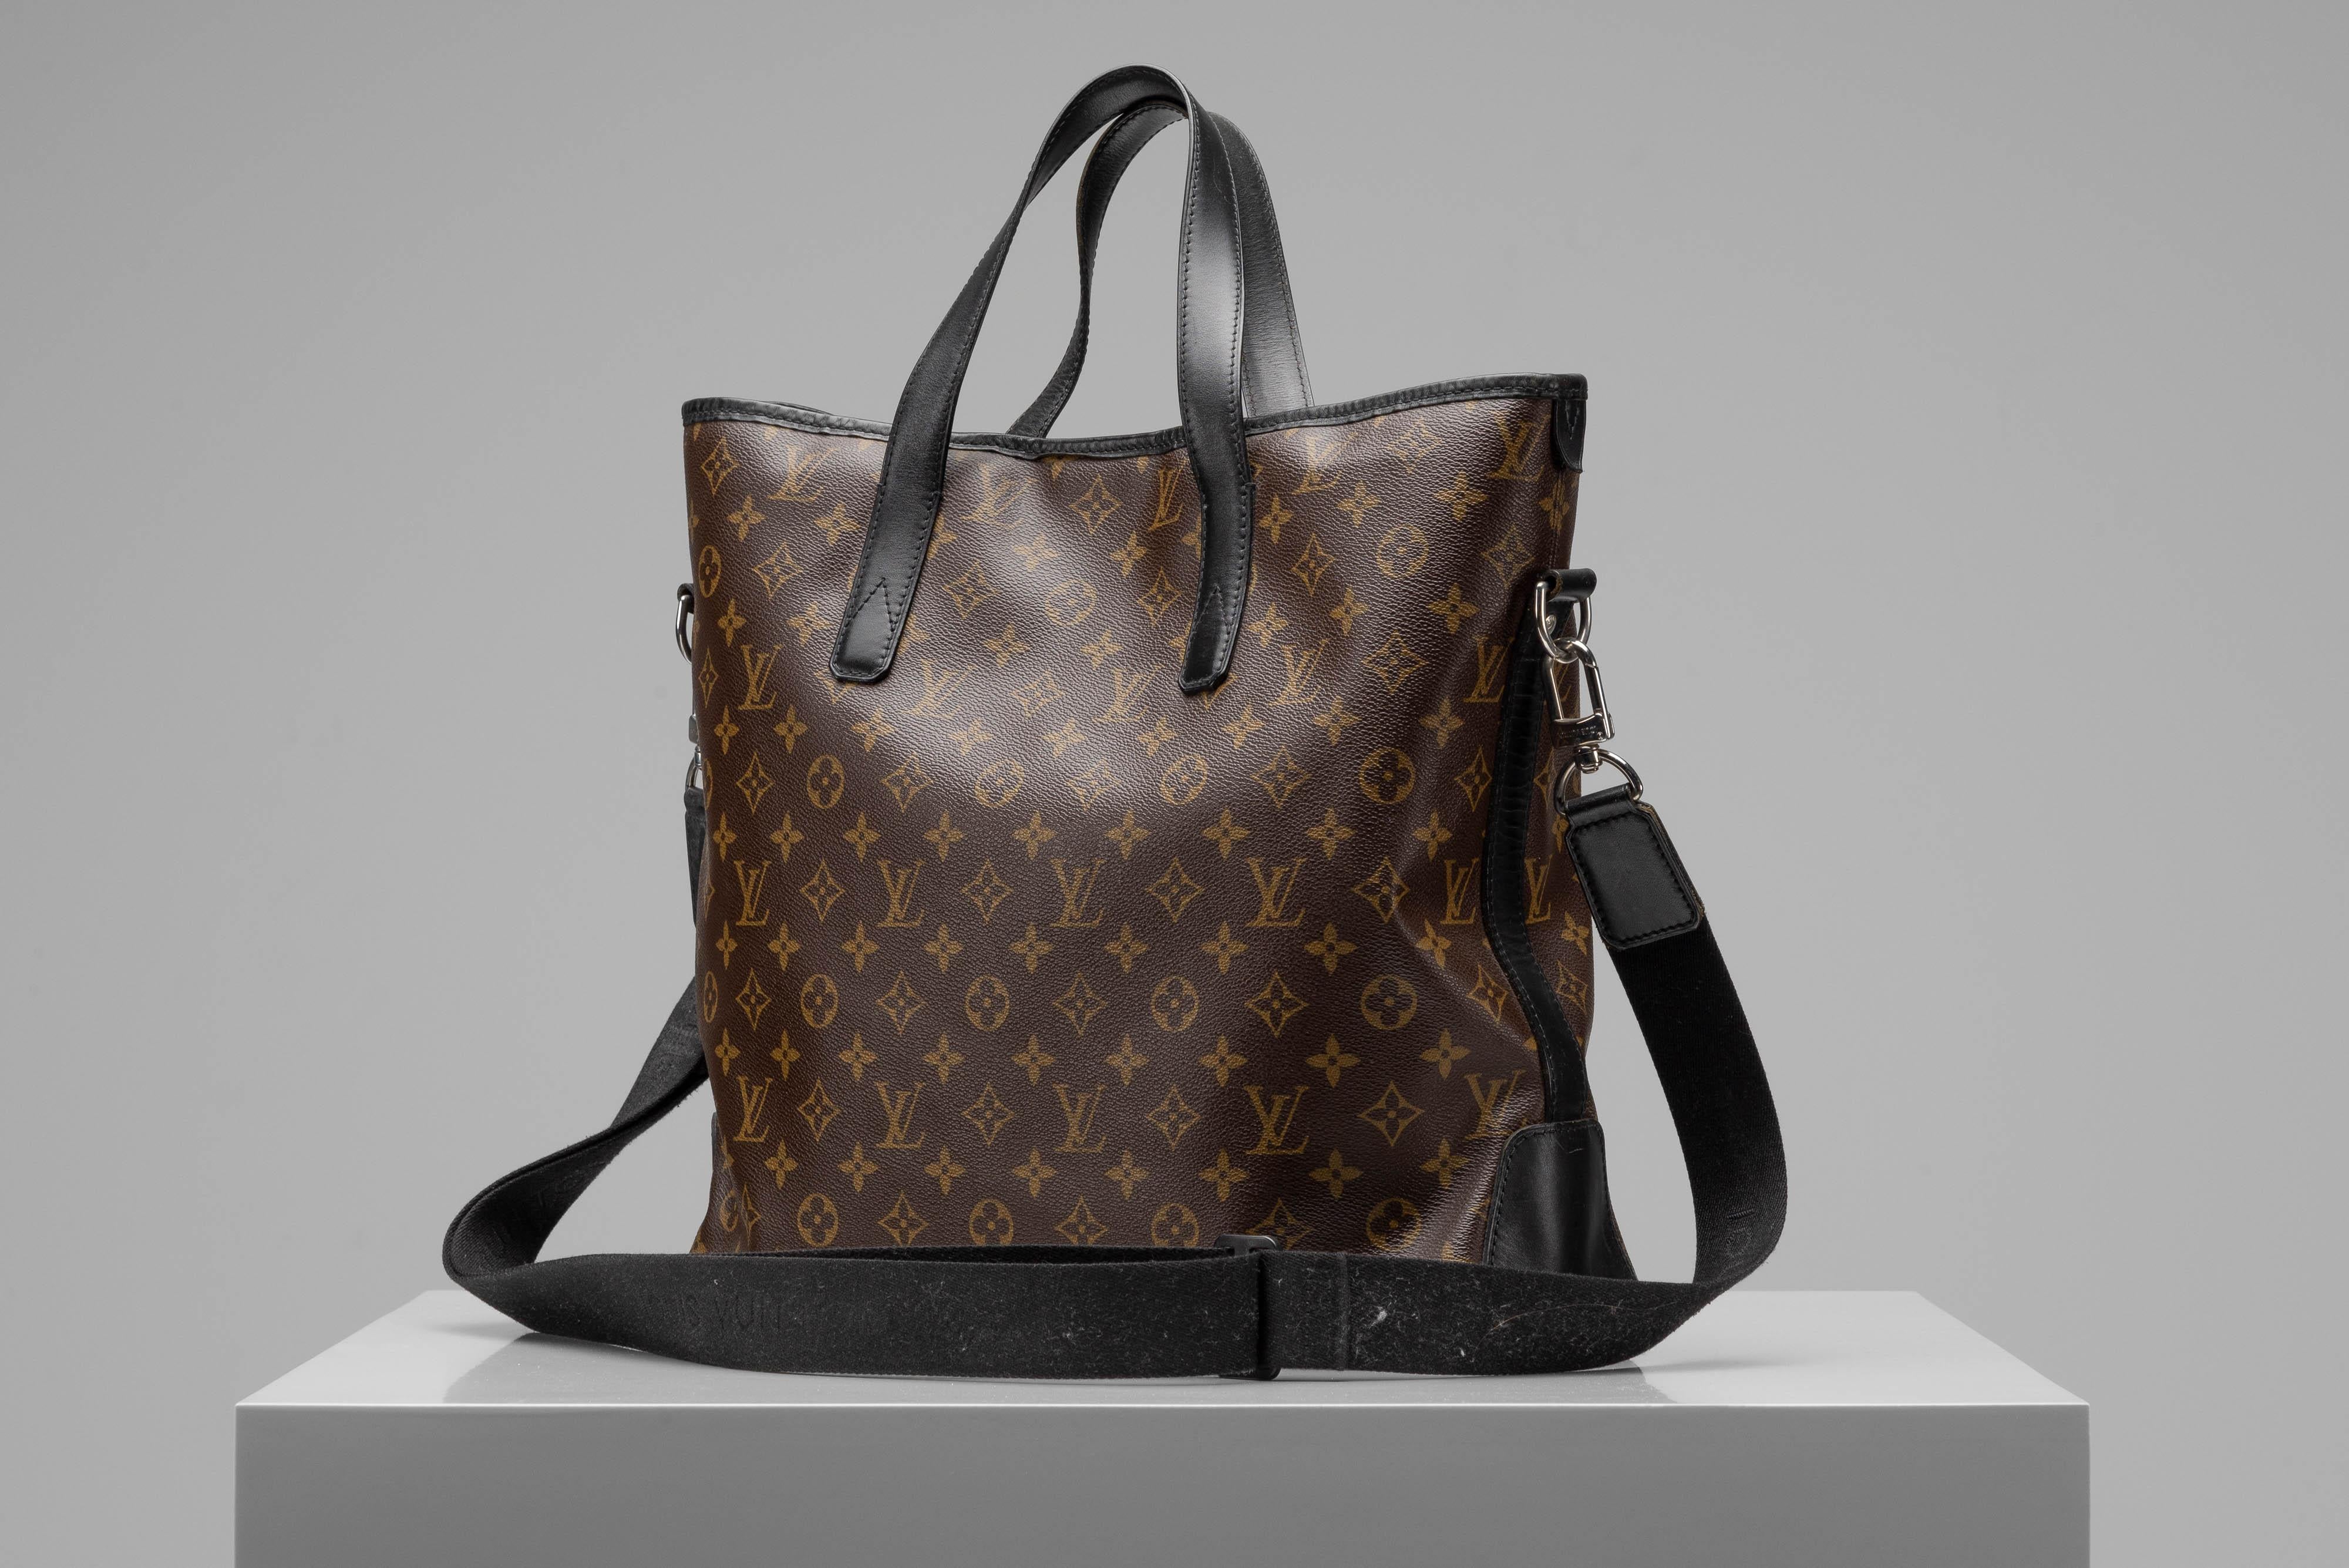 Louis Vuitton Macassar Davis Shopper Canvas Tote Bag In Good Condition For Sale In Roosendaal, NL